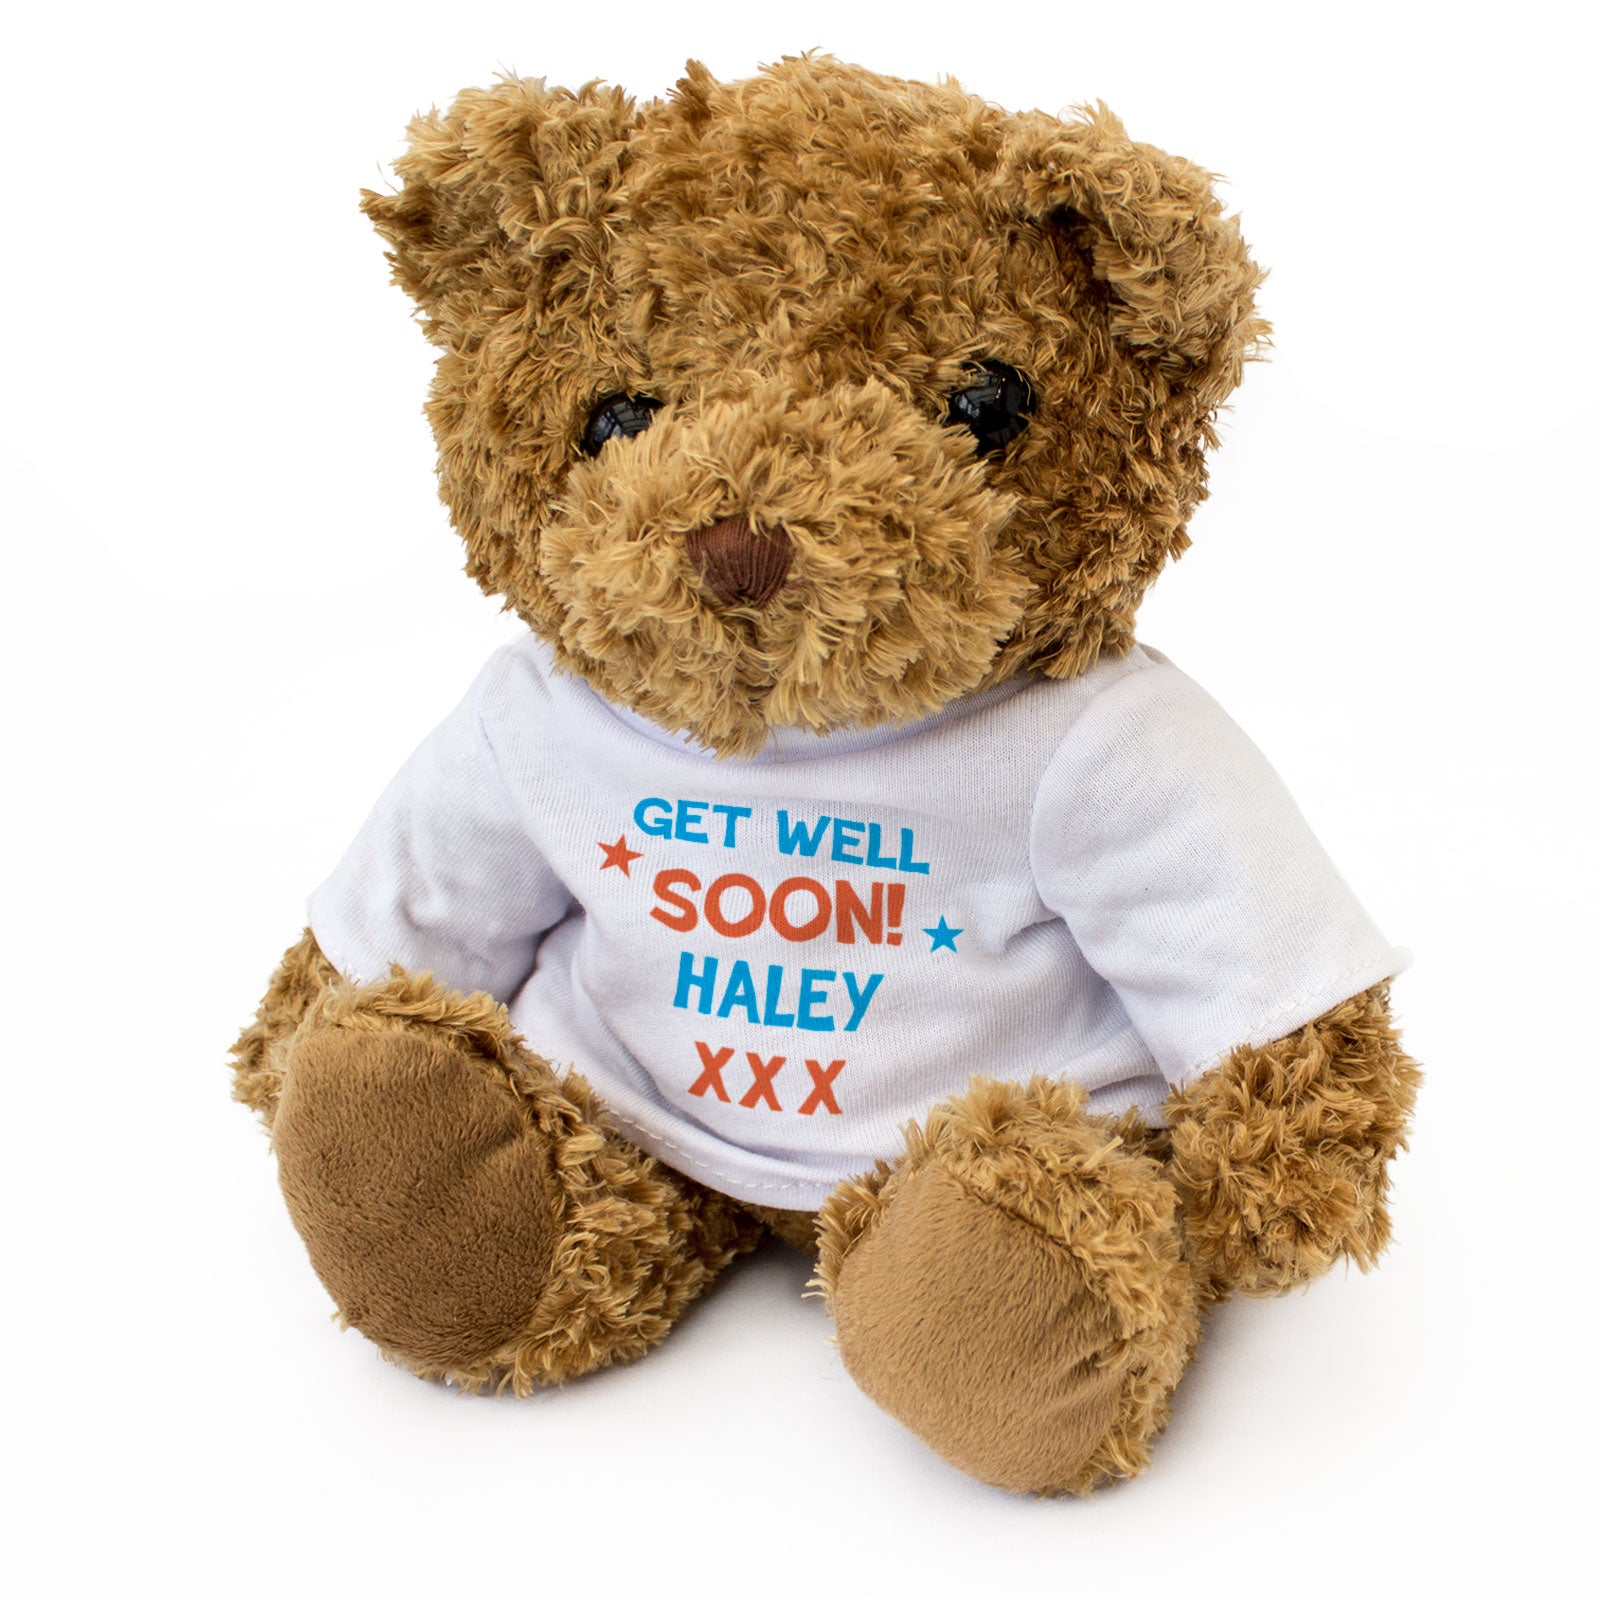 Get Well Soon Haley - Teddy Bear